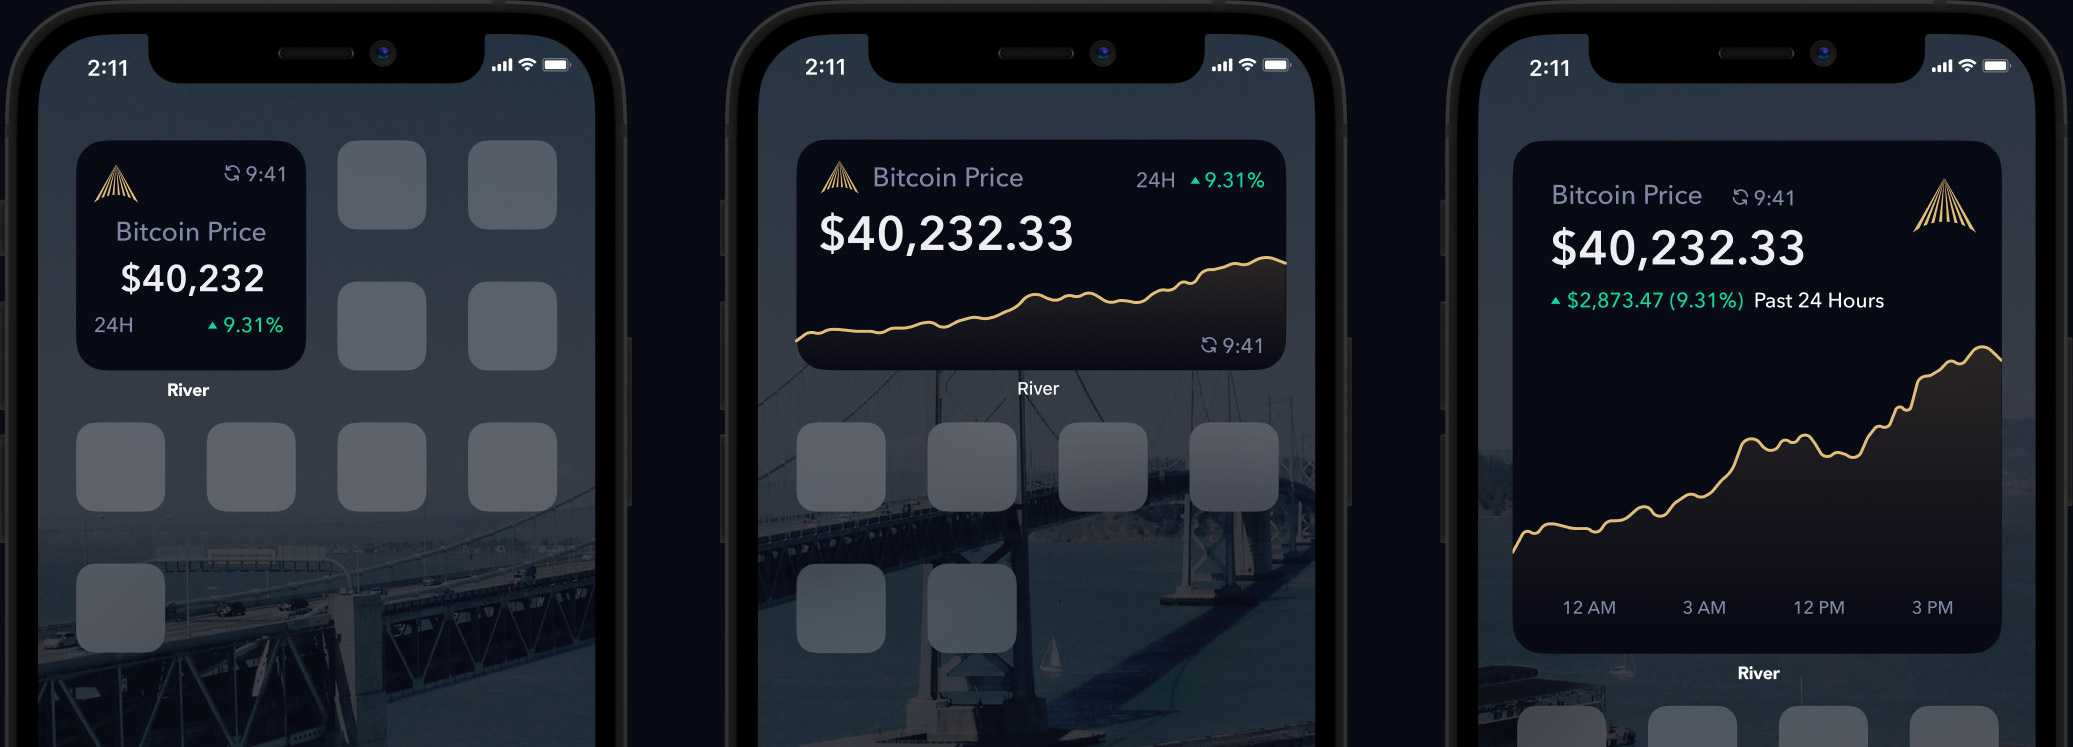 iOS app price widget screen view